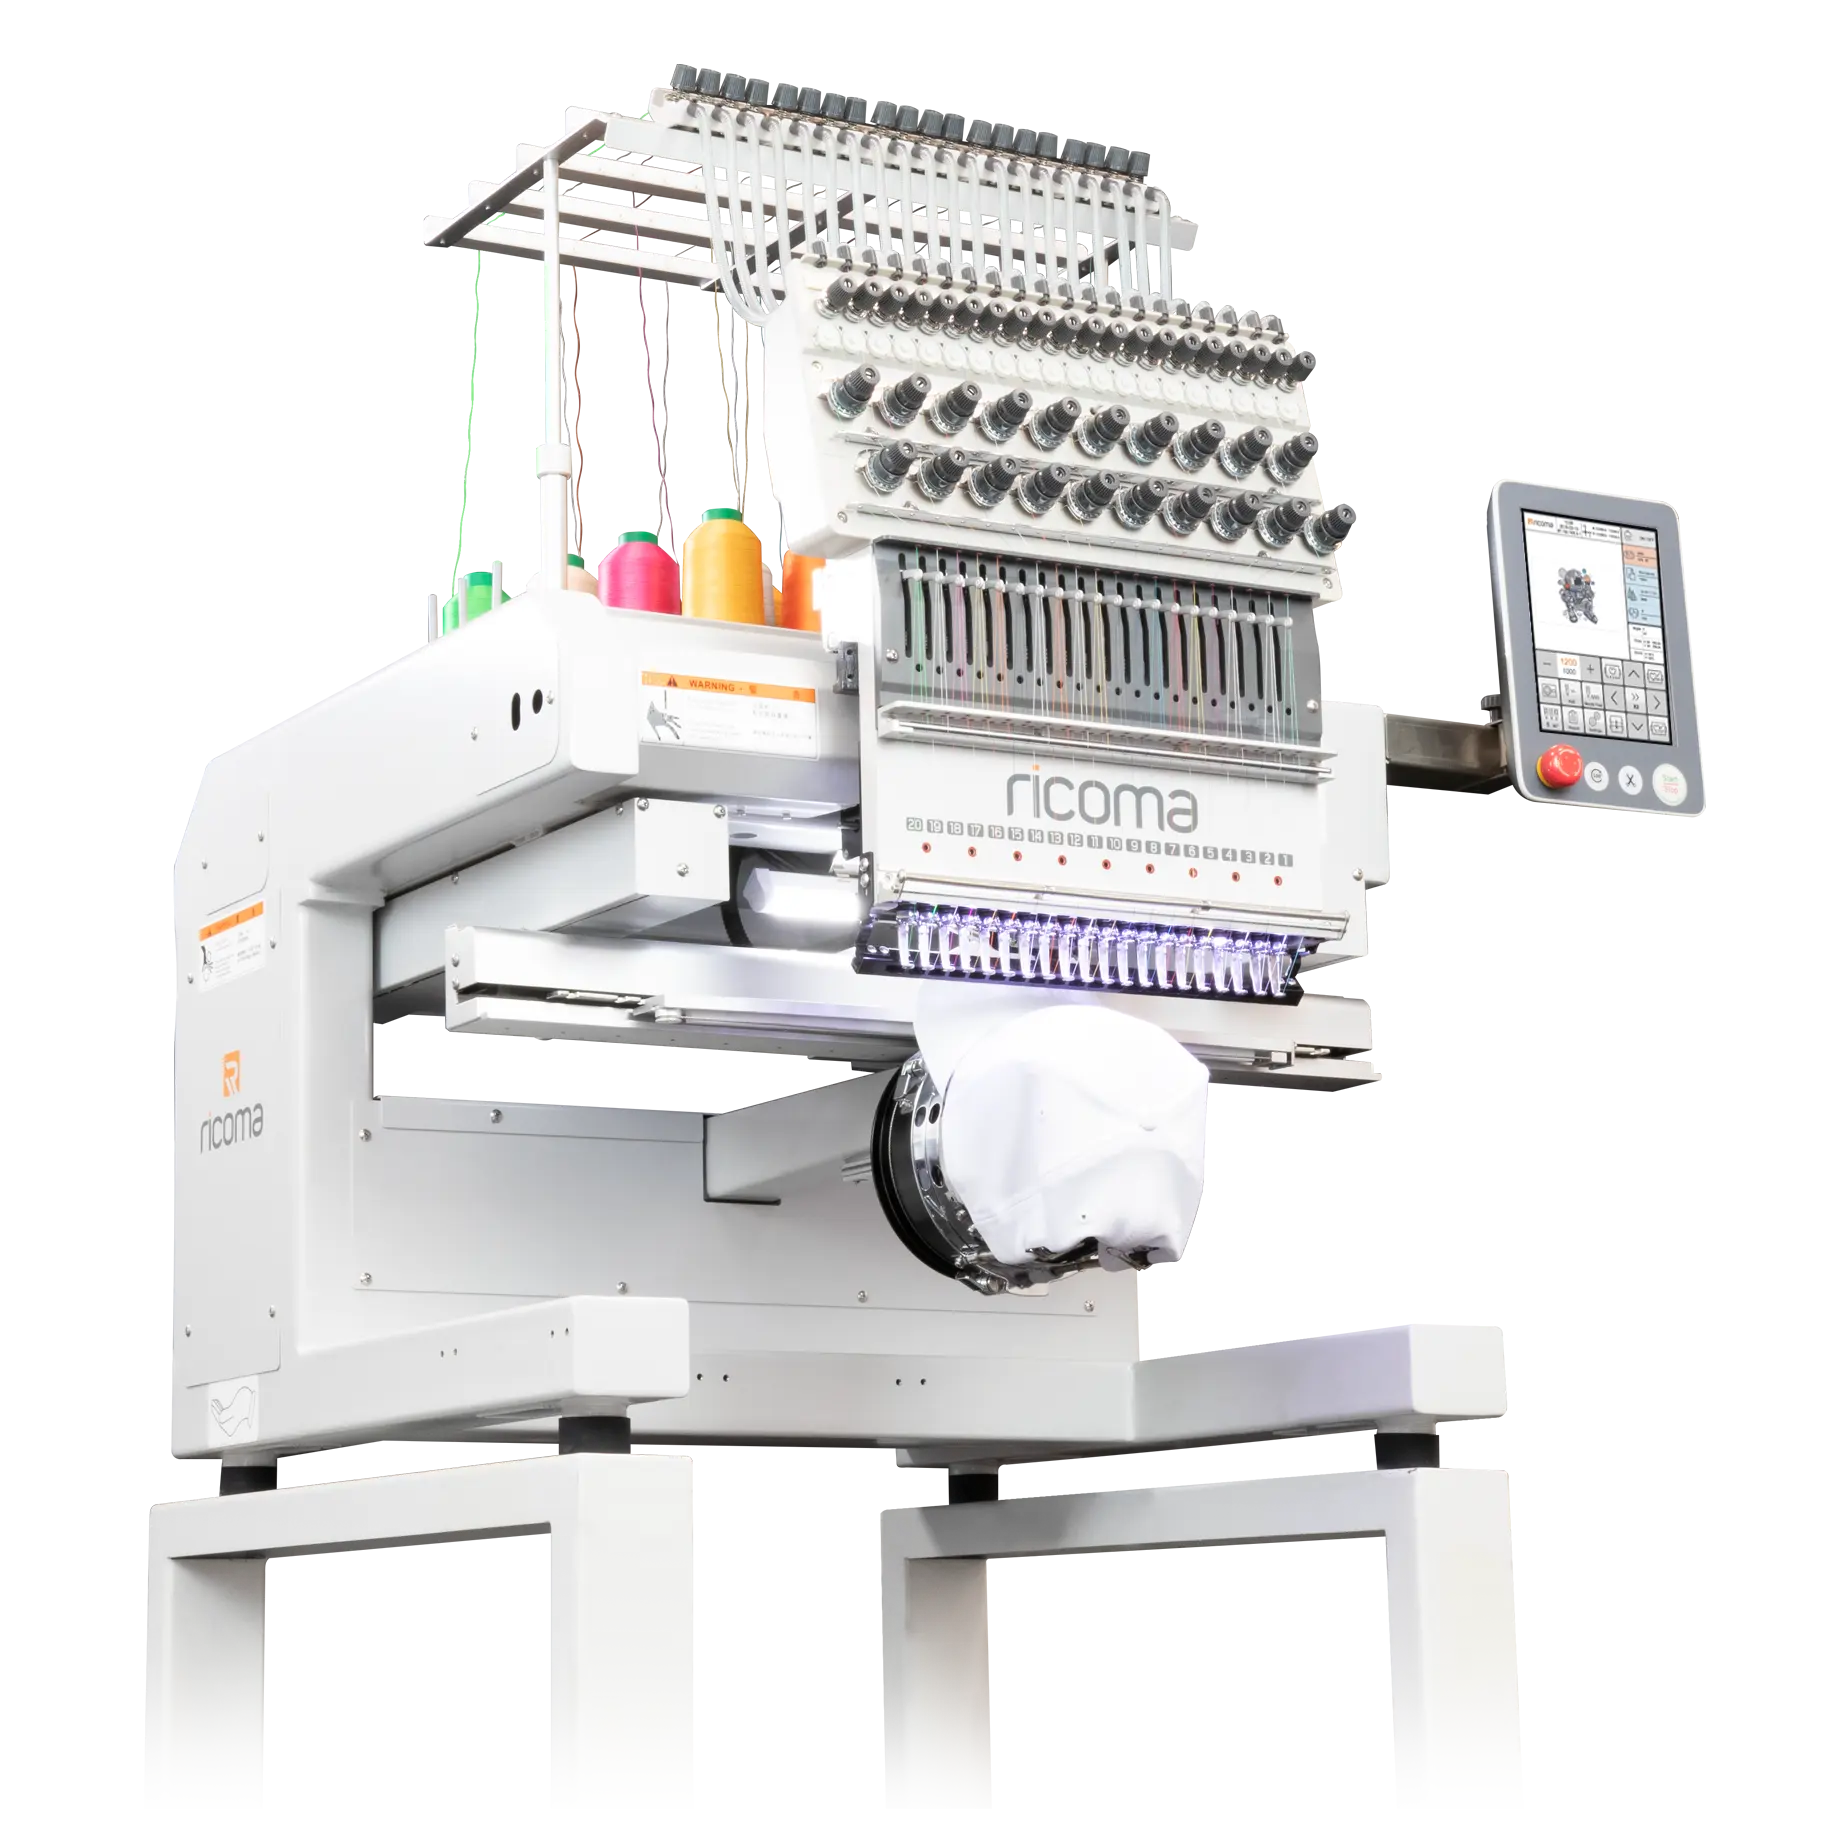 3 Head Full Automatic Best Embroidery Machine for Beginners 2021 - China  Embroidery Machine, 3 Head Embroidery Machine